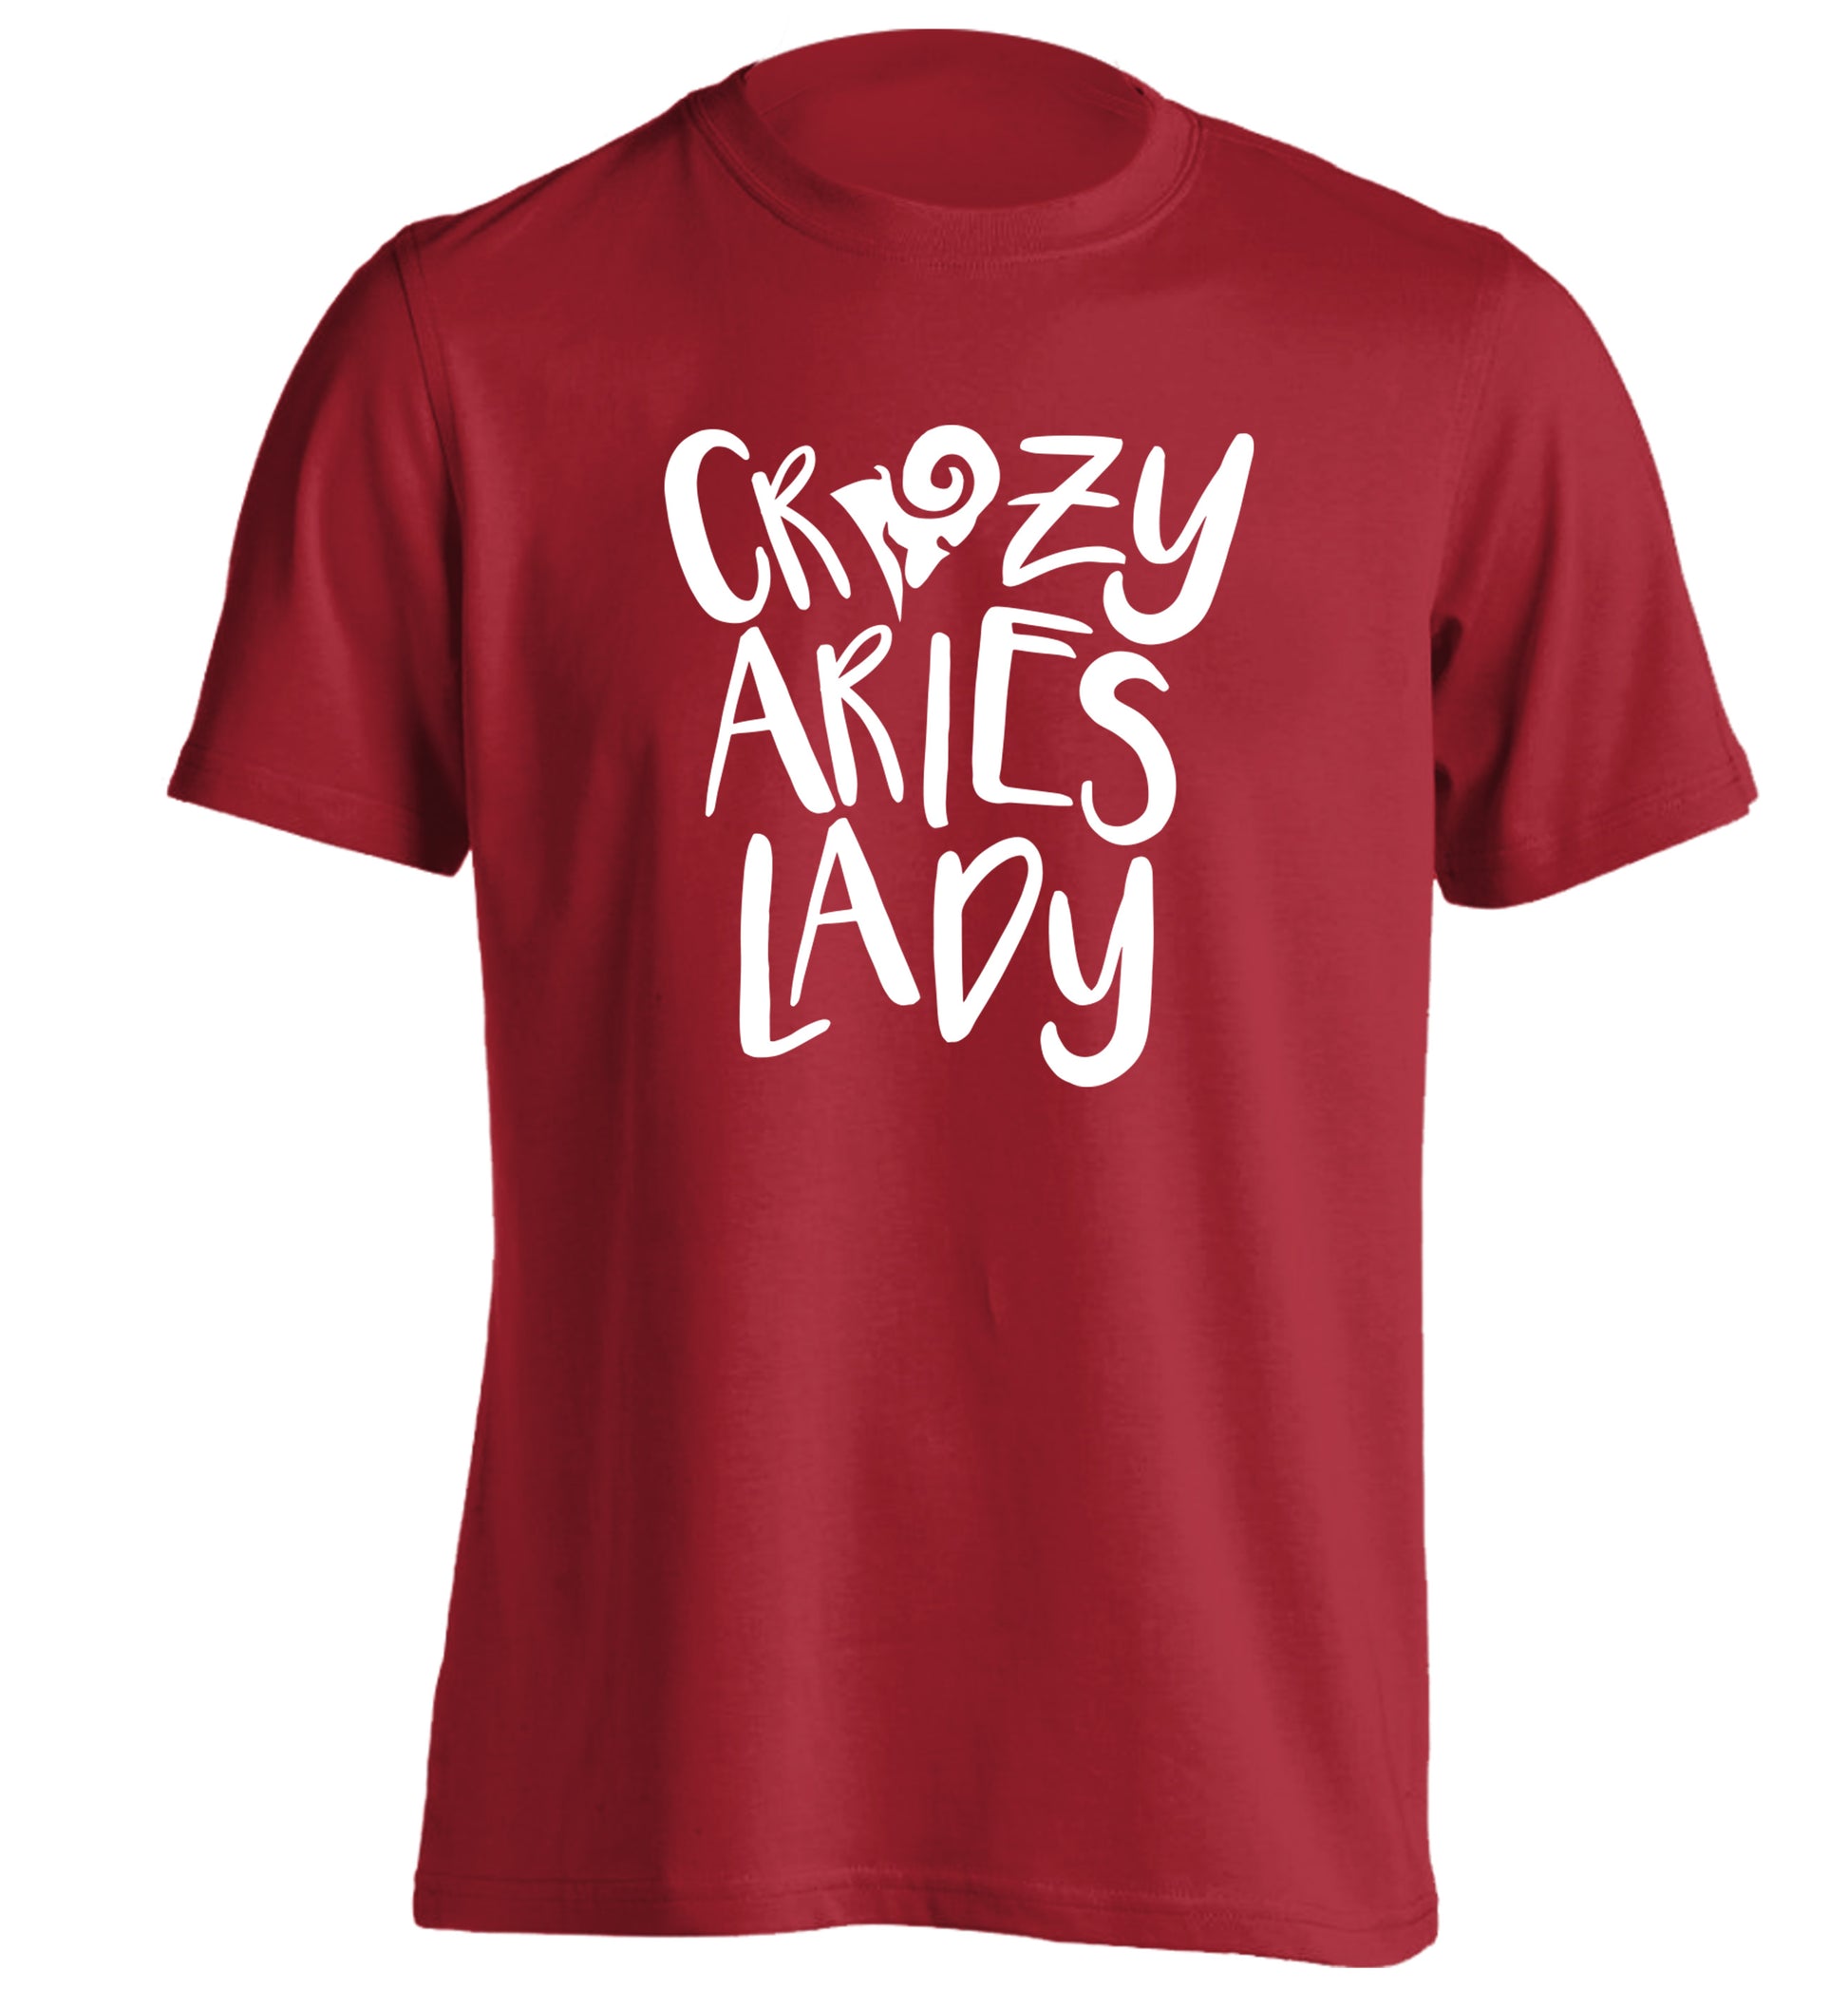 Crazy aries lady adults unisex red Tshirt 2XL